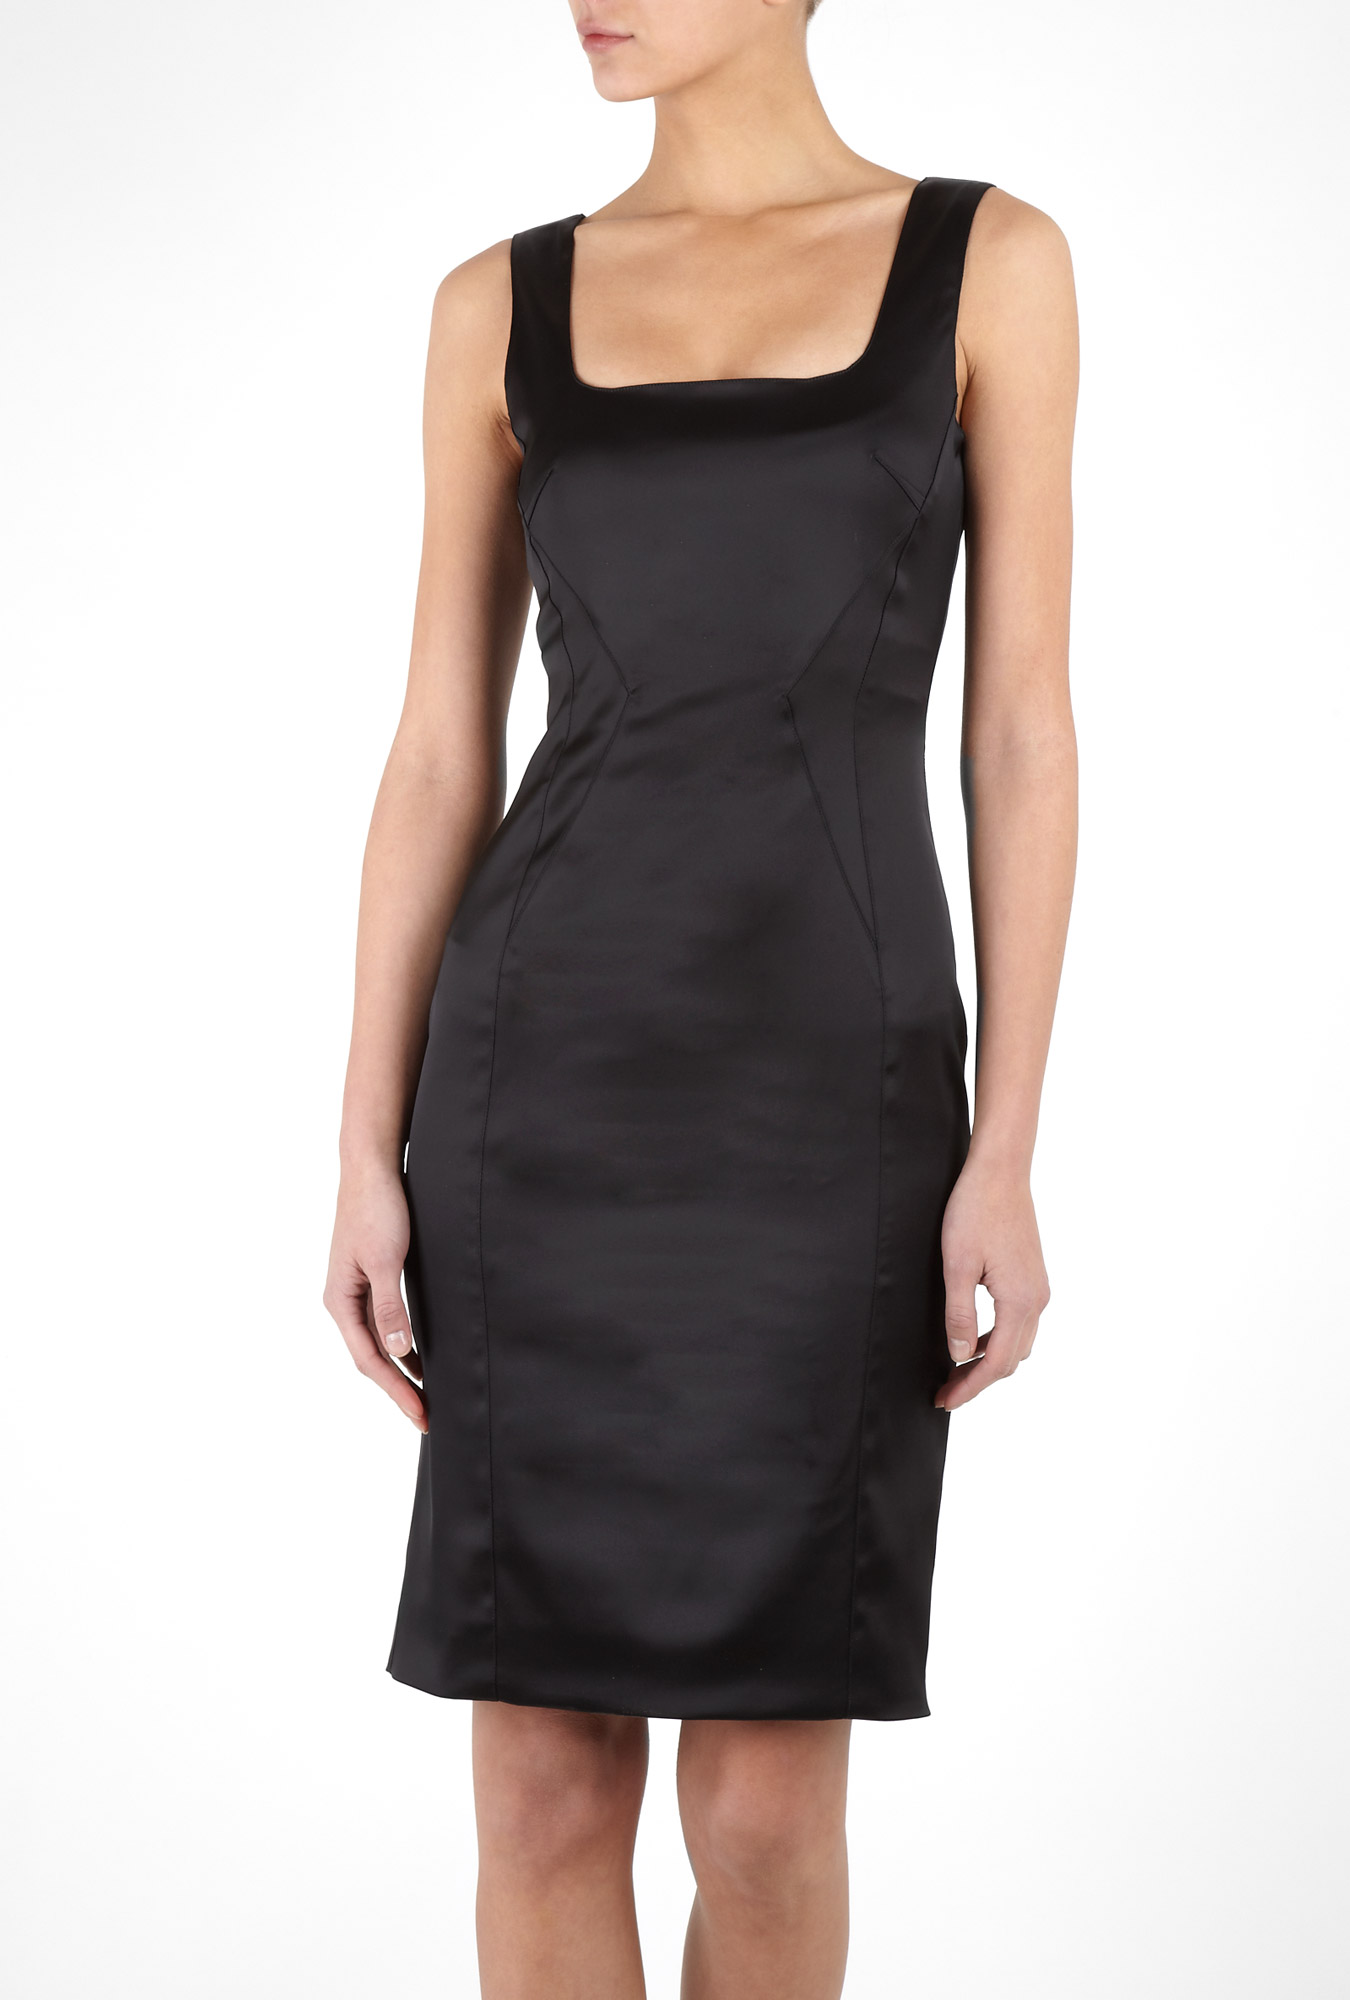 D&g Sleeveless Stretch Satin Dress in Black | Lyst